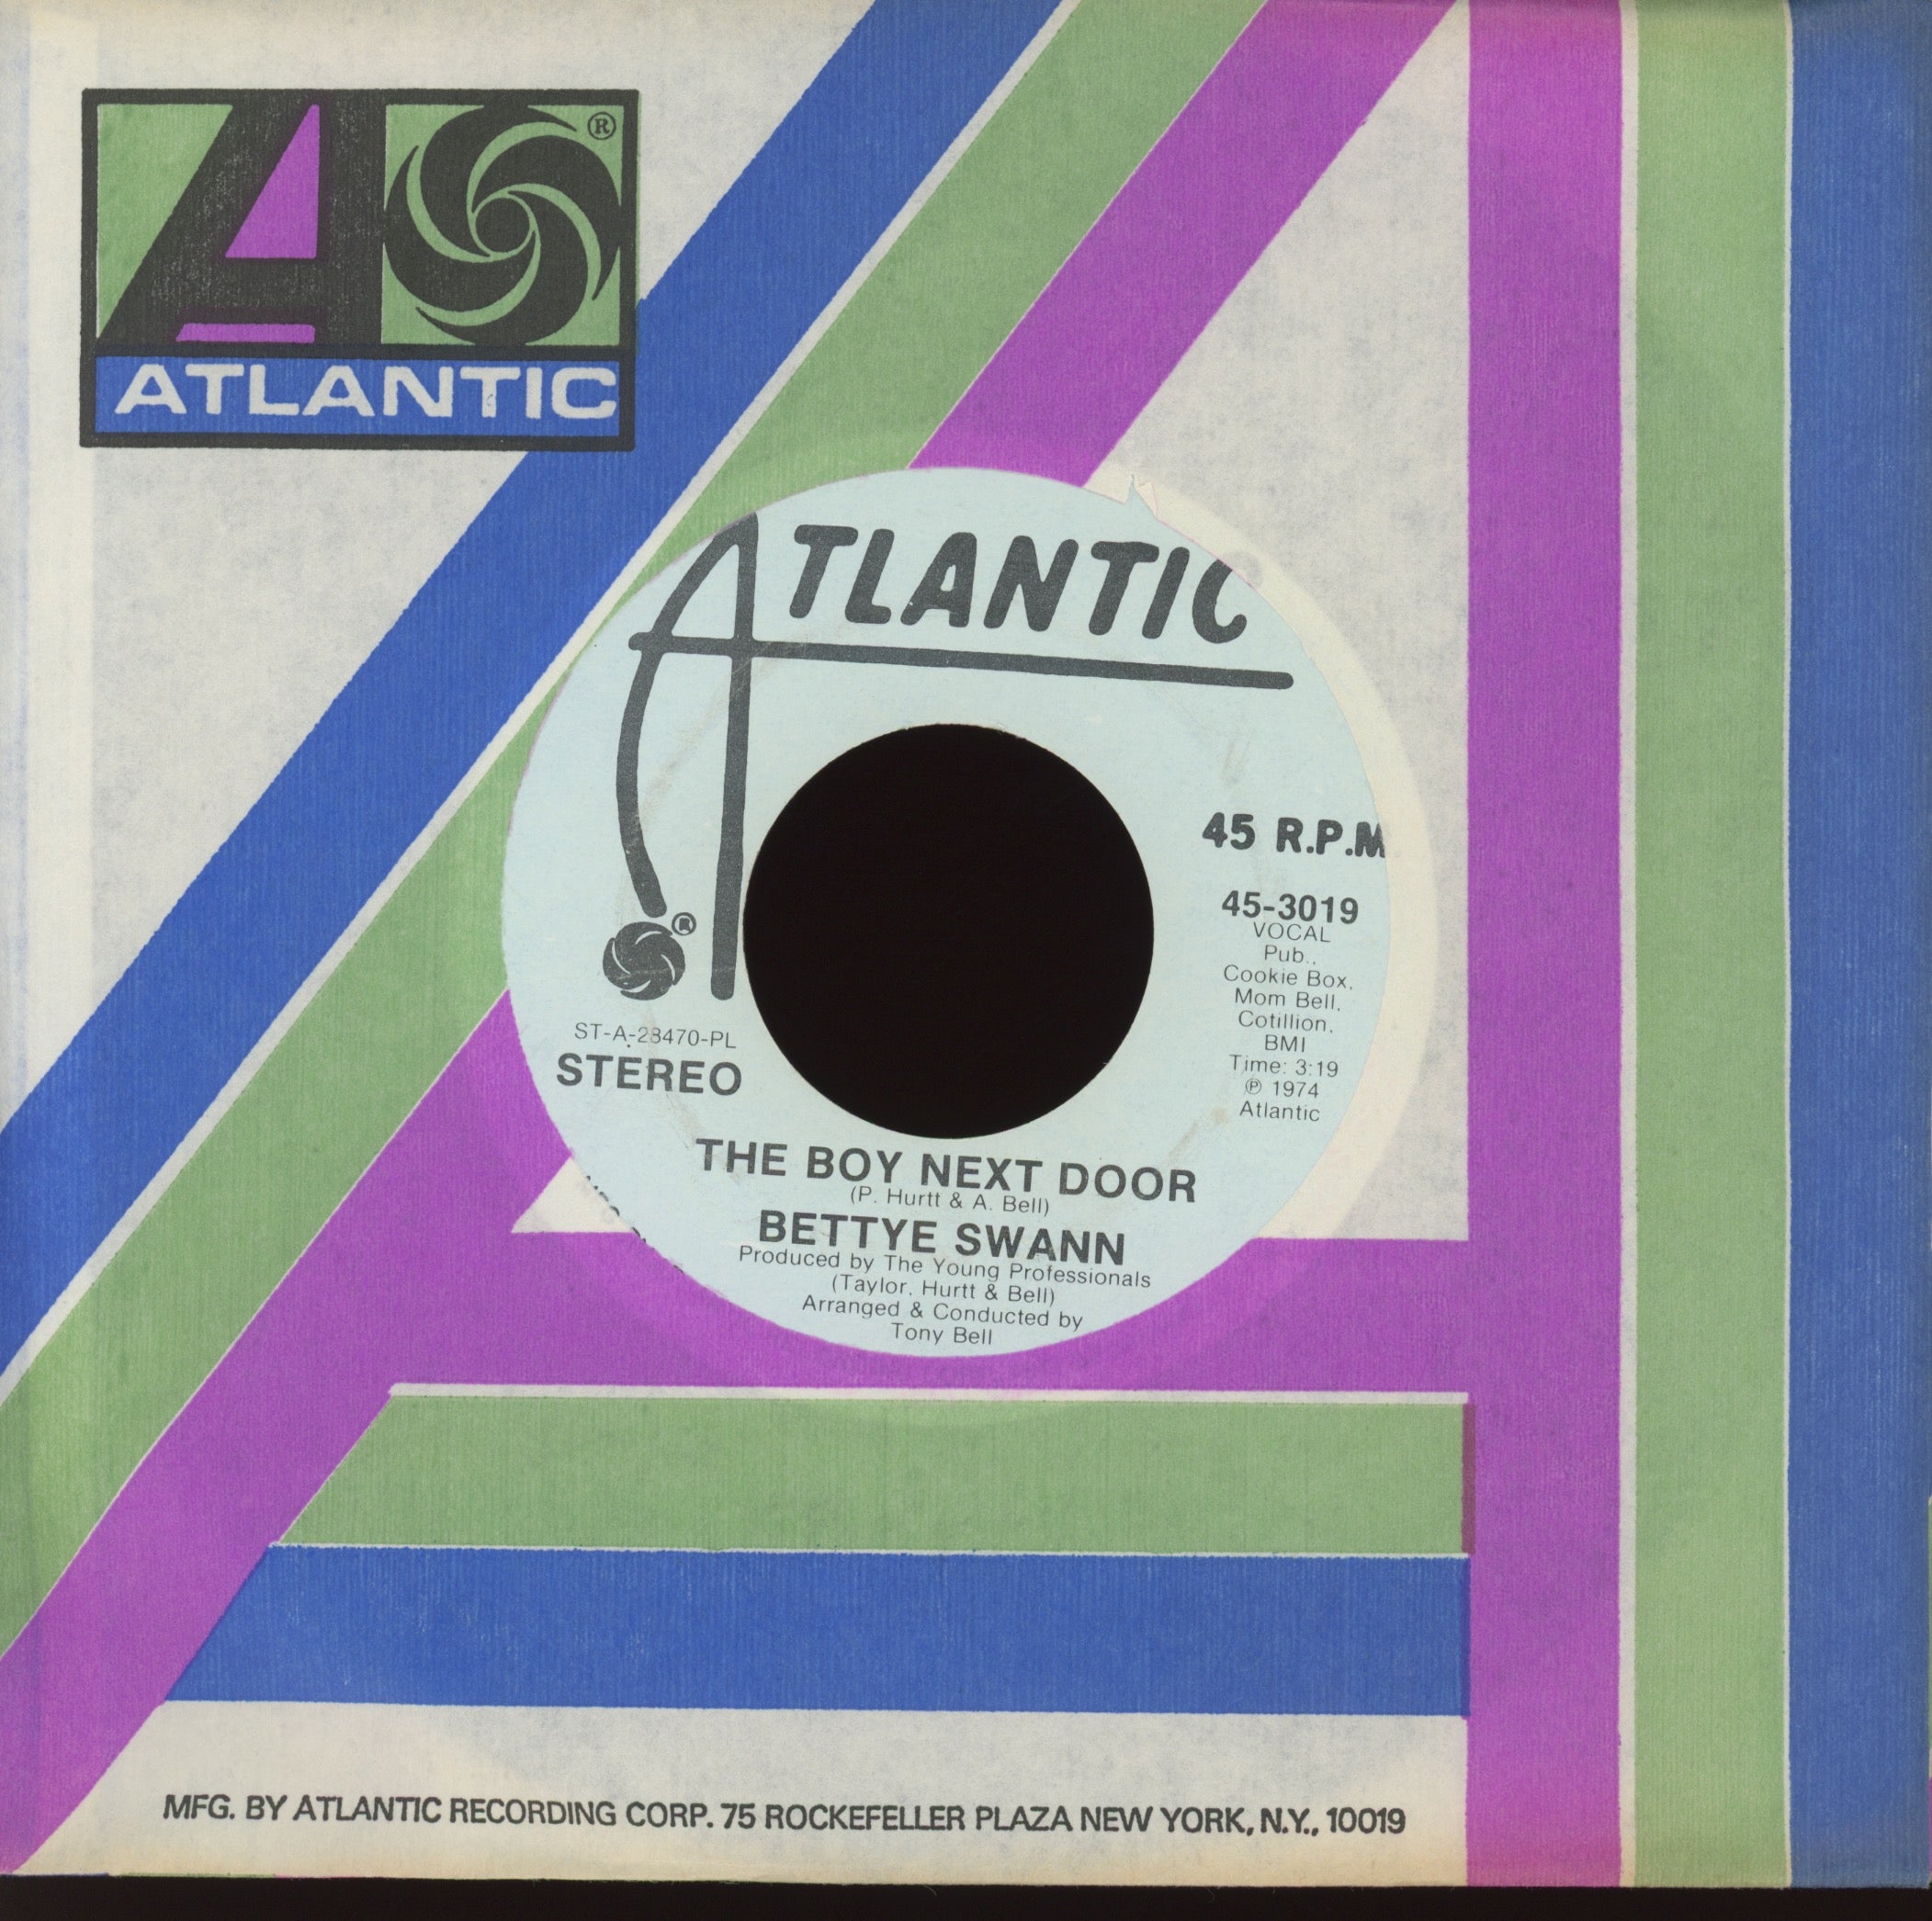 Bettye Swann - The Boy Next Door on Atlantic Promo